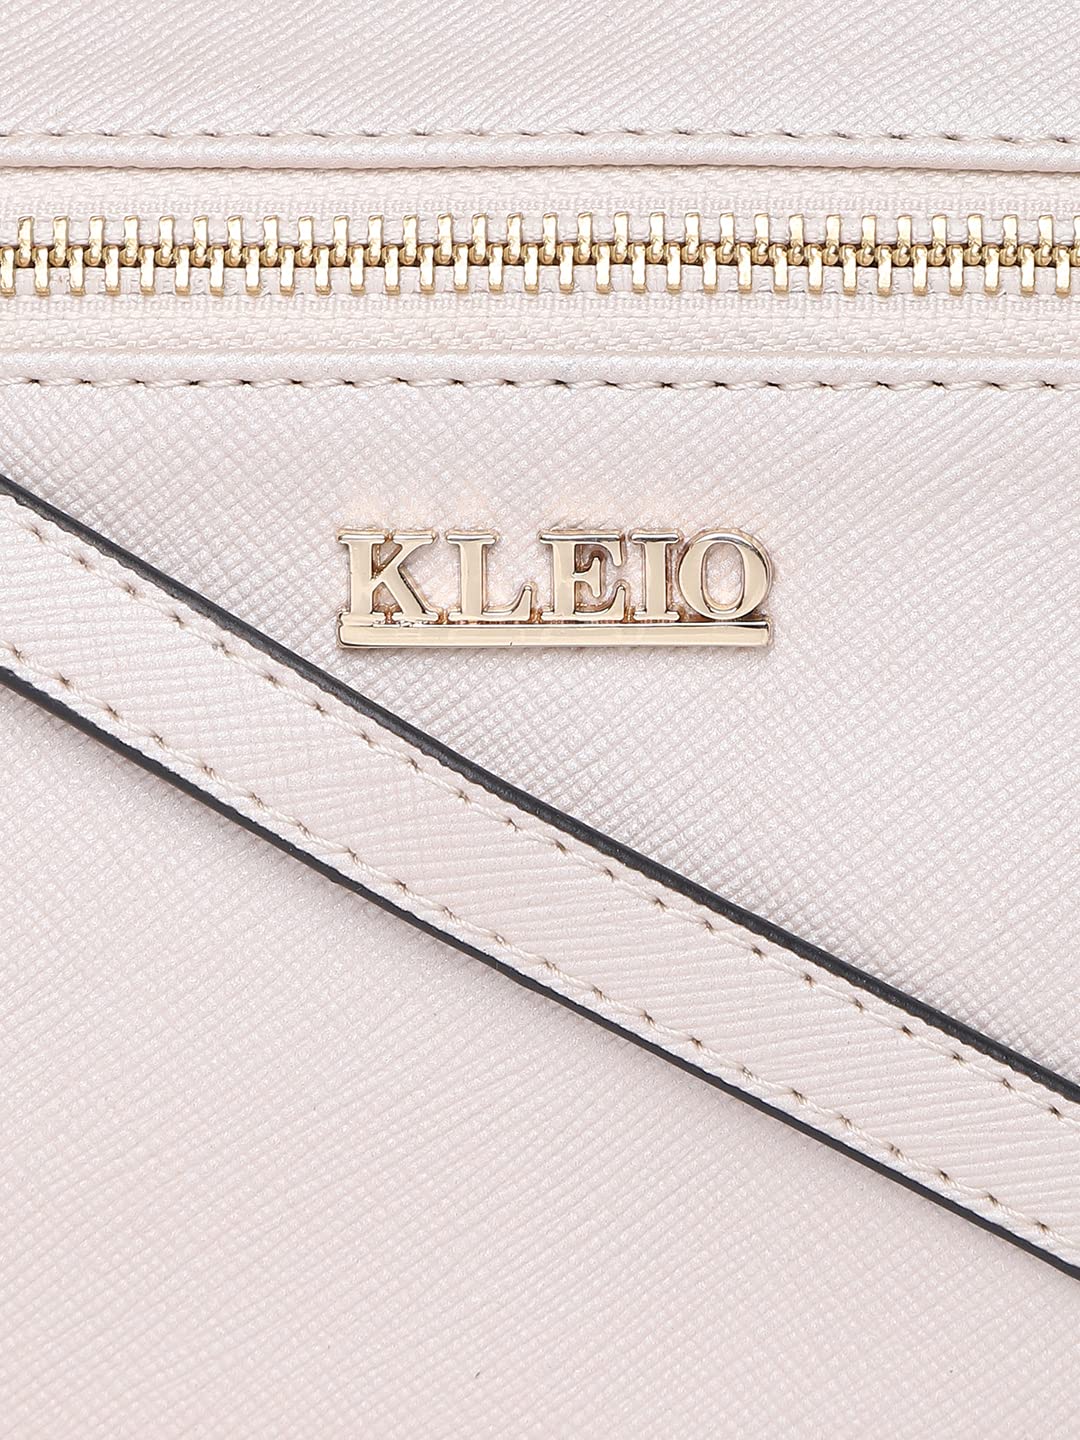 KLEIO Causal lightweight Short sling Shoulder Handbag for Women and Girls (Cream)